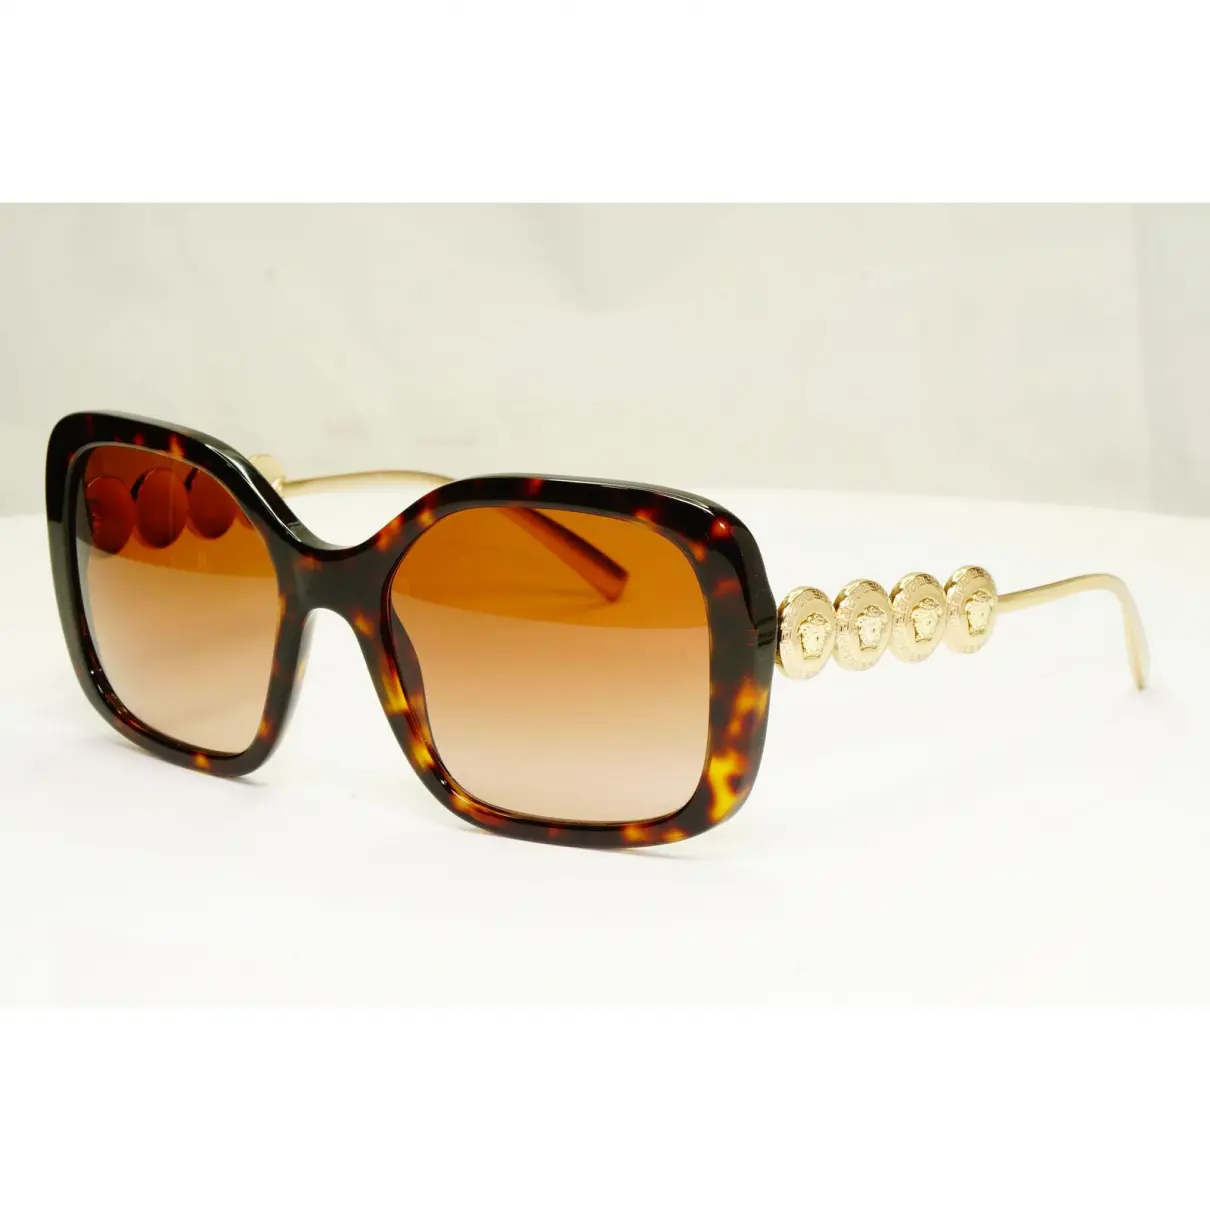 Sunglasses Versace